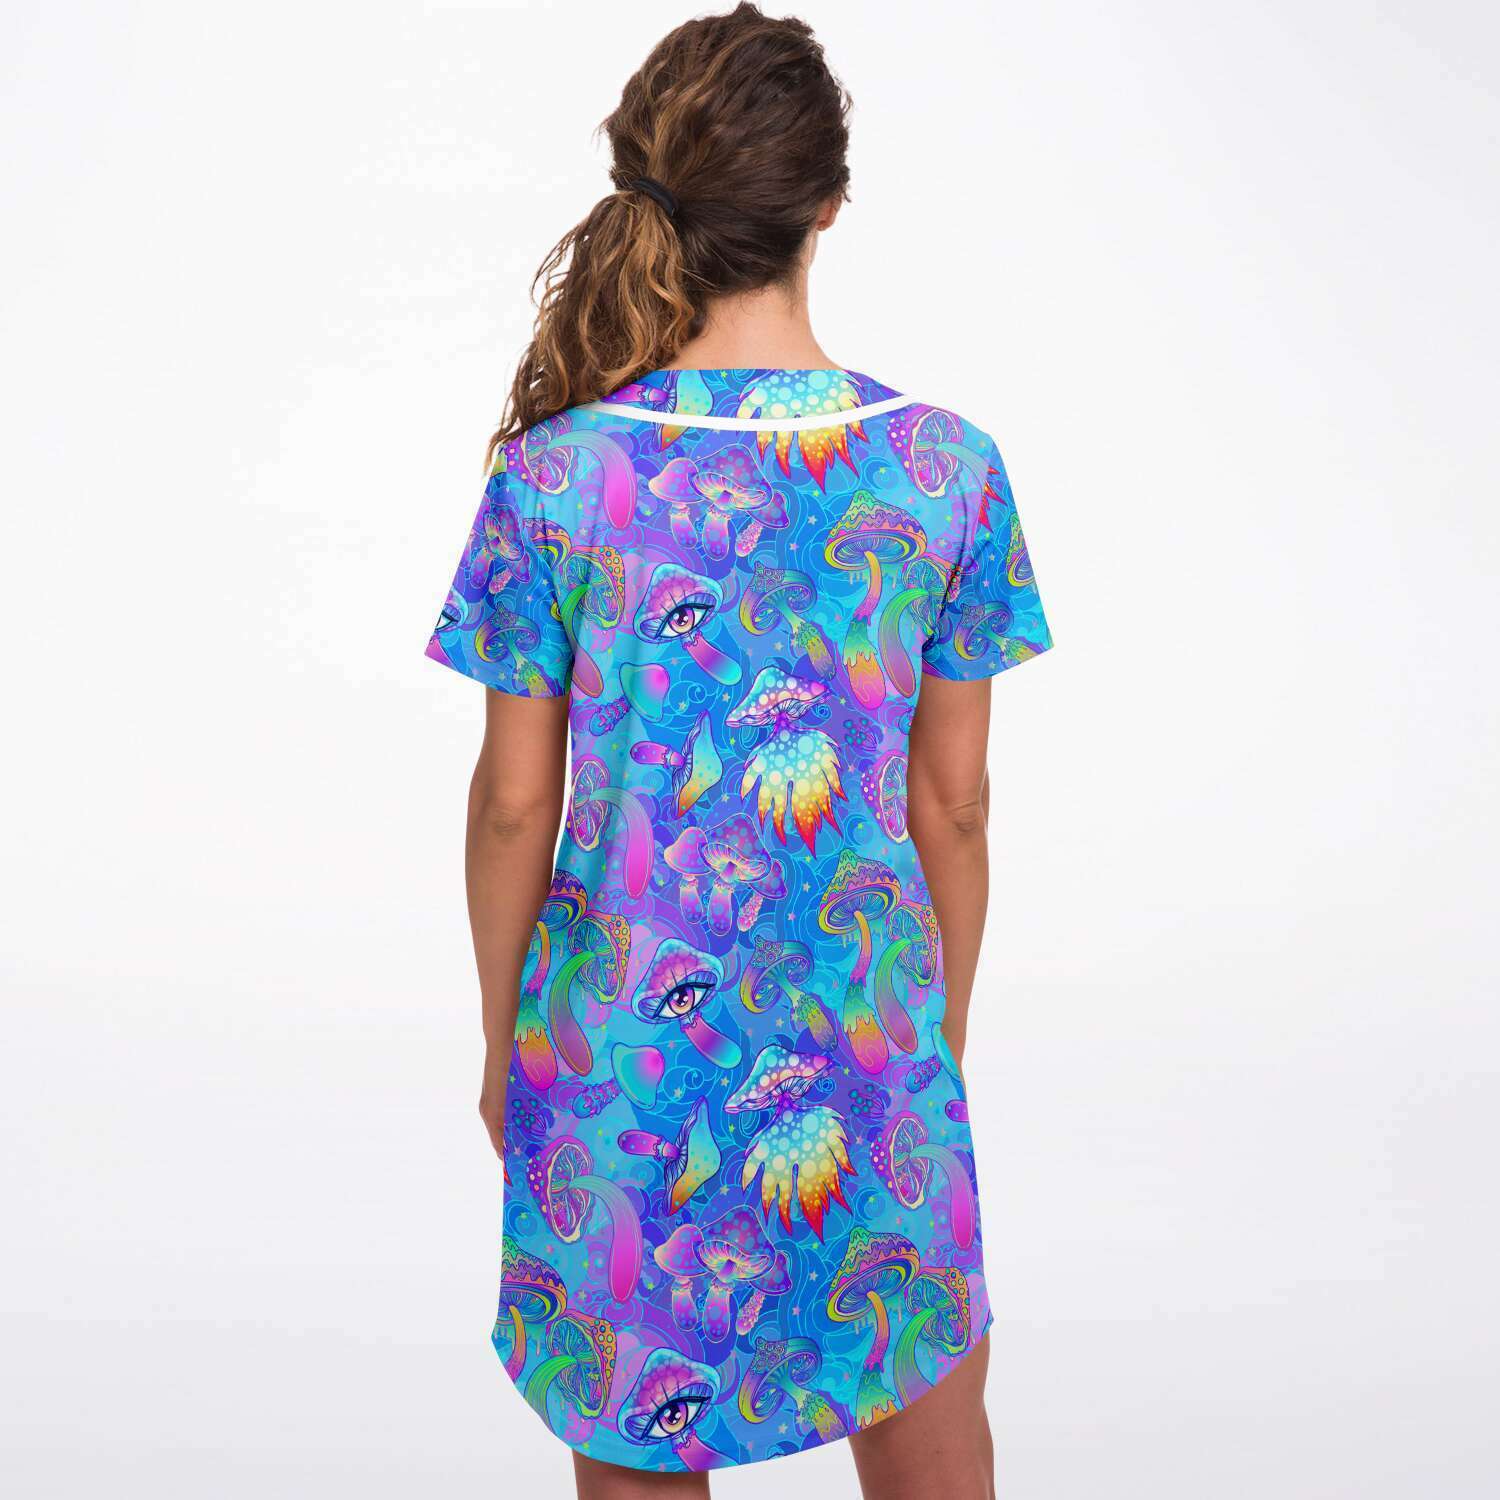 Blue Psychedelic Magic Mushrooms Female Festival Jersey Dress